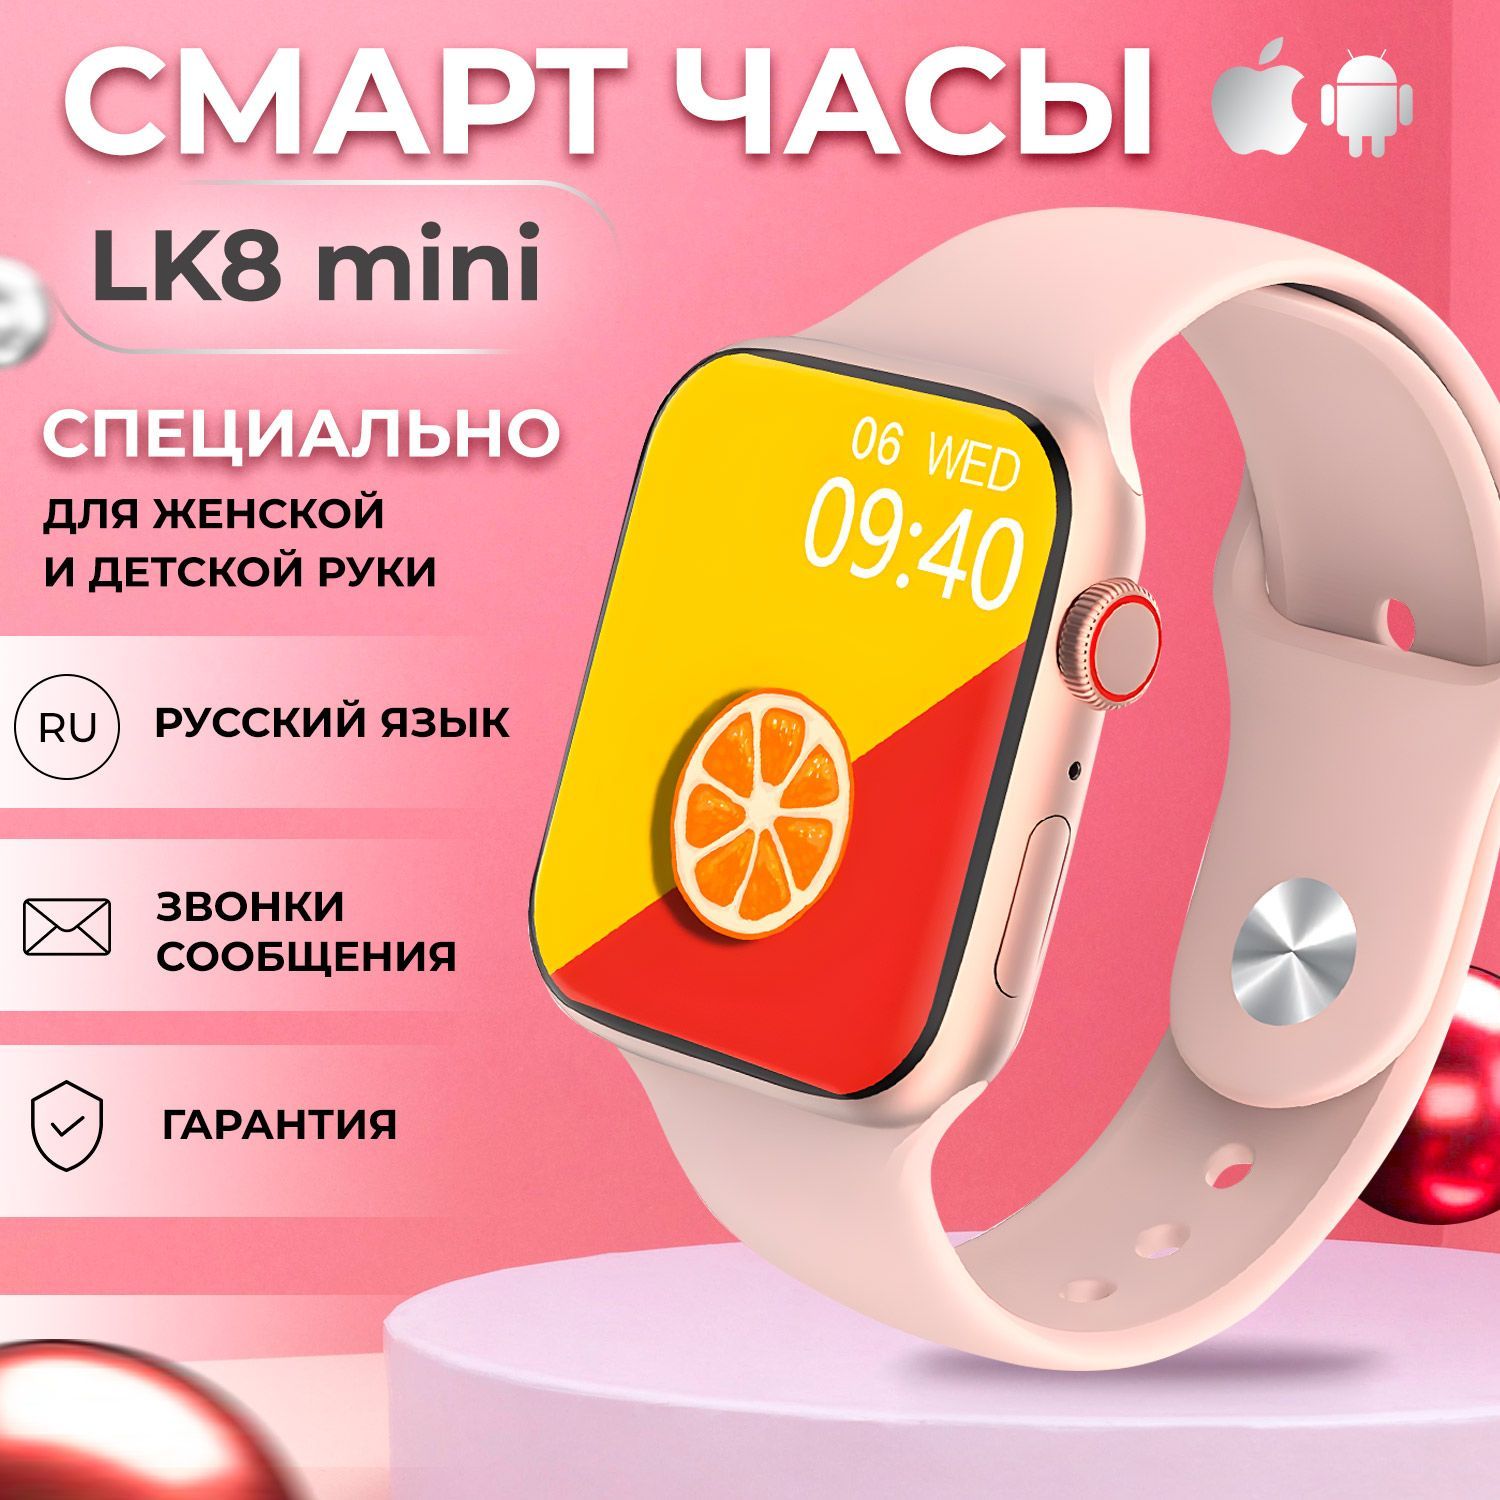 LK 8 Mini Smart watch. Детские смарт часы lk9 Mini или lk8 Mini. Smart watch LK gt 4 Mini золотой. Смарт часы lk8 Mini или lk9 Mini какие лучше.